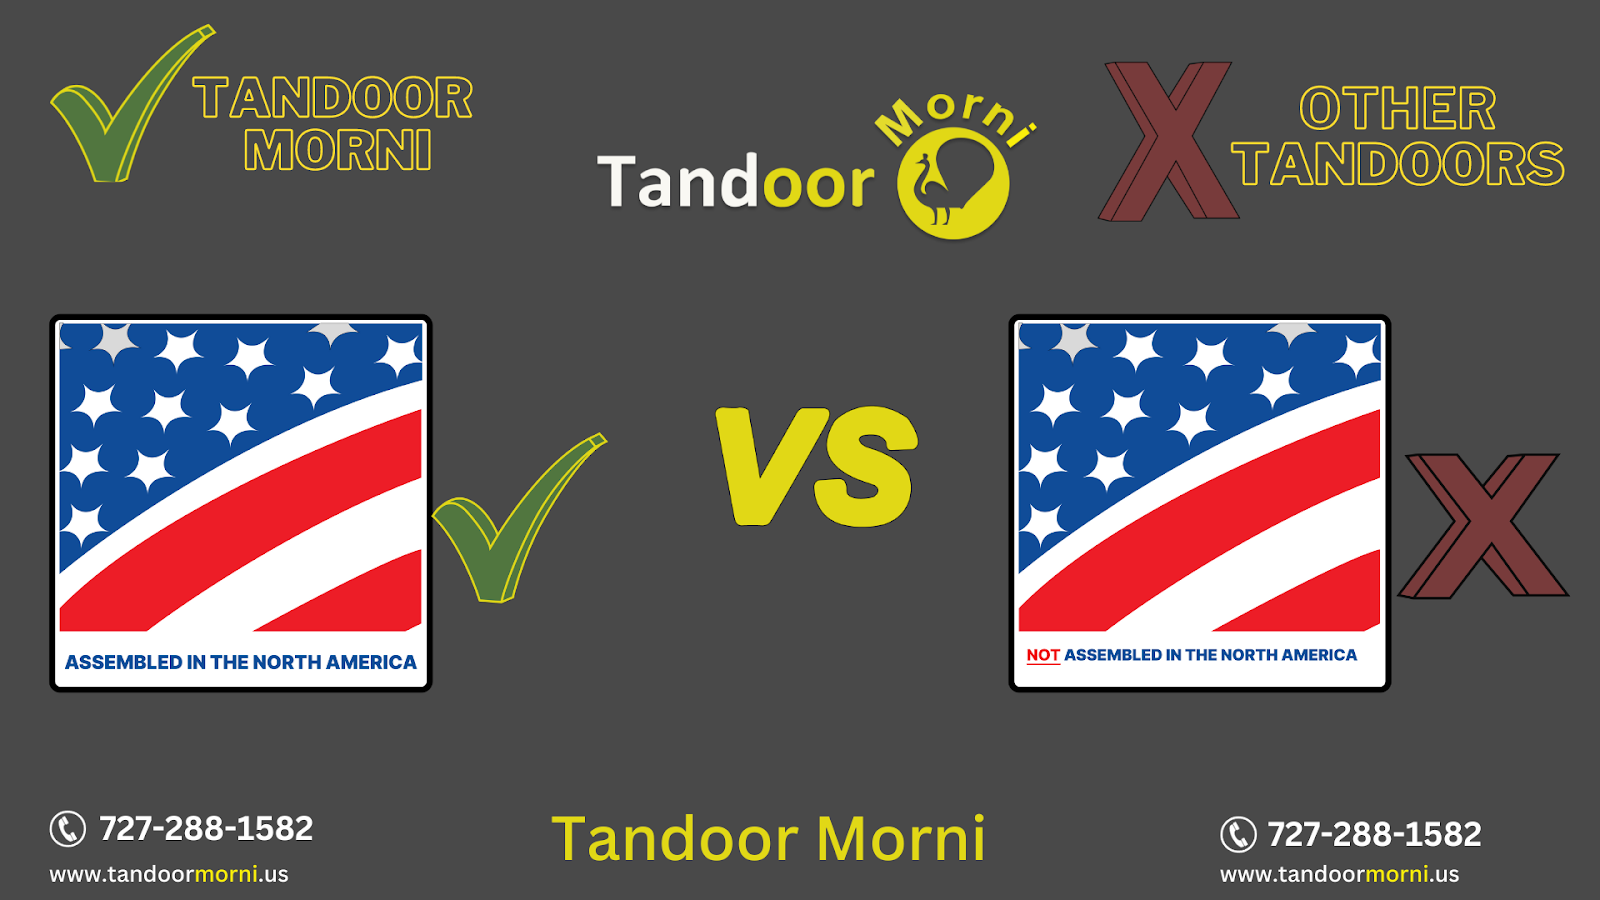 Morni's Tandoori Tandoor is manufactured in North America, however tandoor manufactured by other producers is not.

Puri tandoor, gulati tandoor, and omcan tandoor are not assembled in North America, although morni tandoor is.